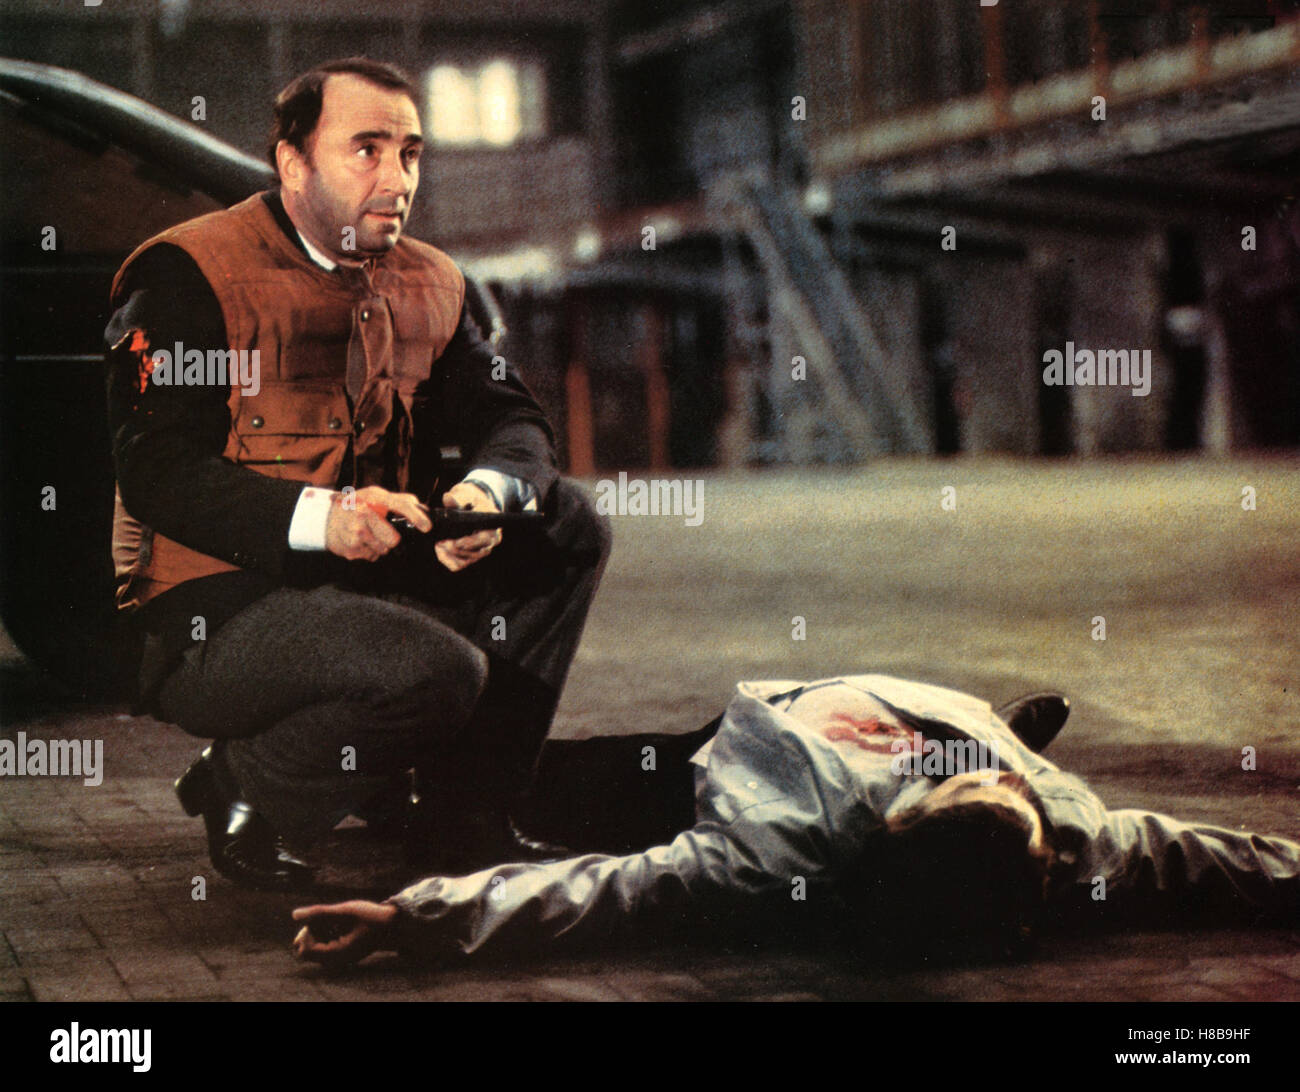 Wespennest, (LA CRIME) F 1983, Regie: Philippe Labro, CLAUDE BRASSEUR, Key: Kommissar, Waffe, Revolver, Leiche, Stock Photo